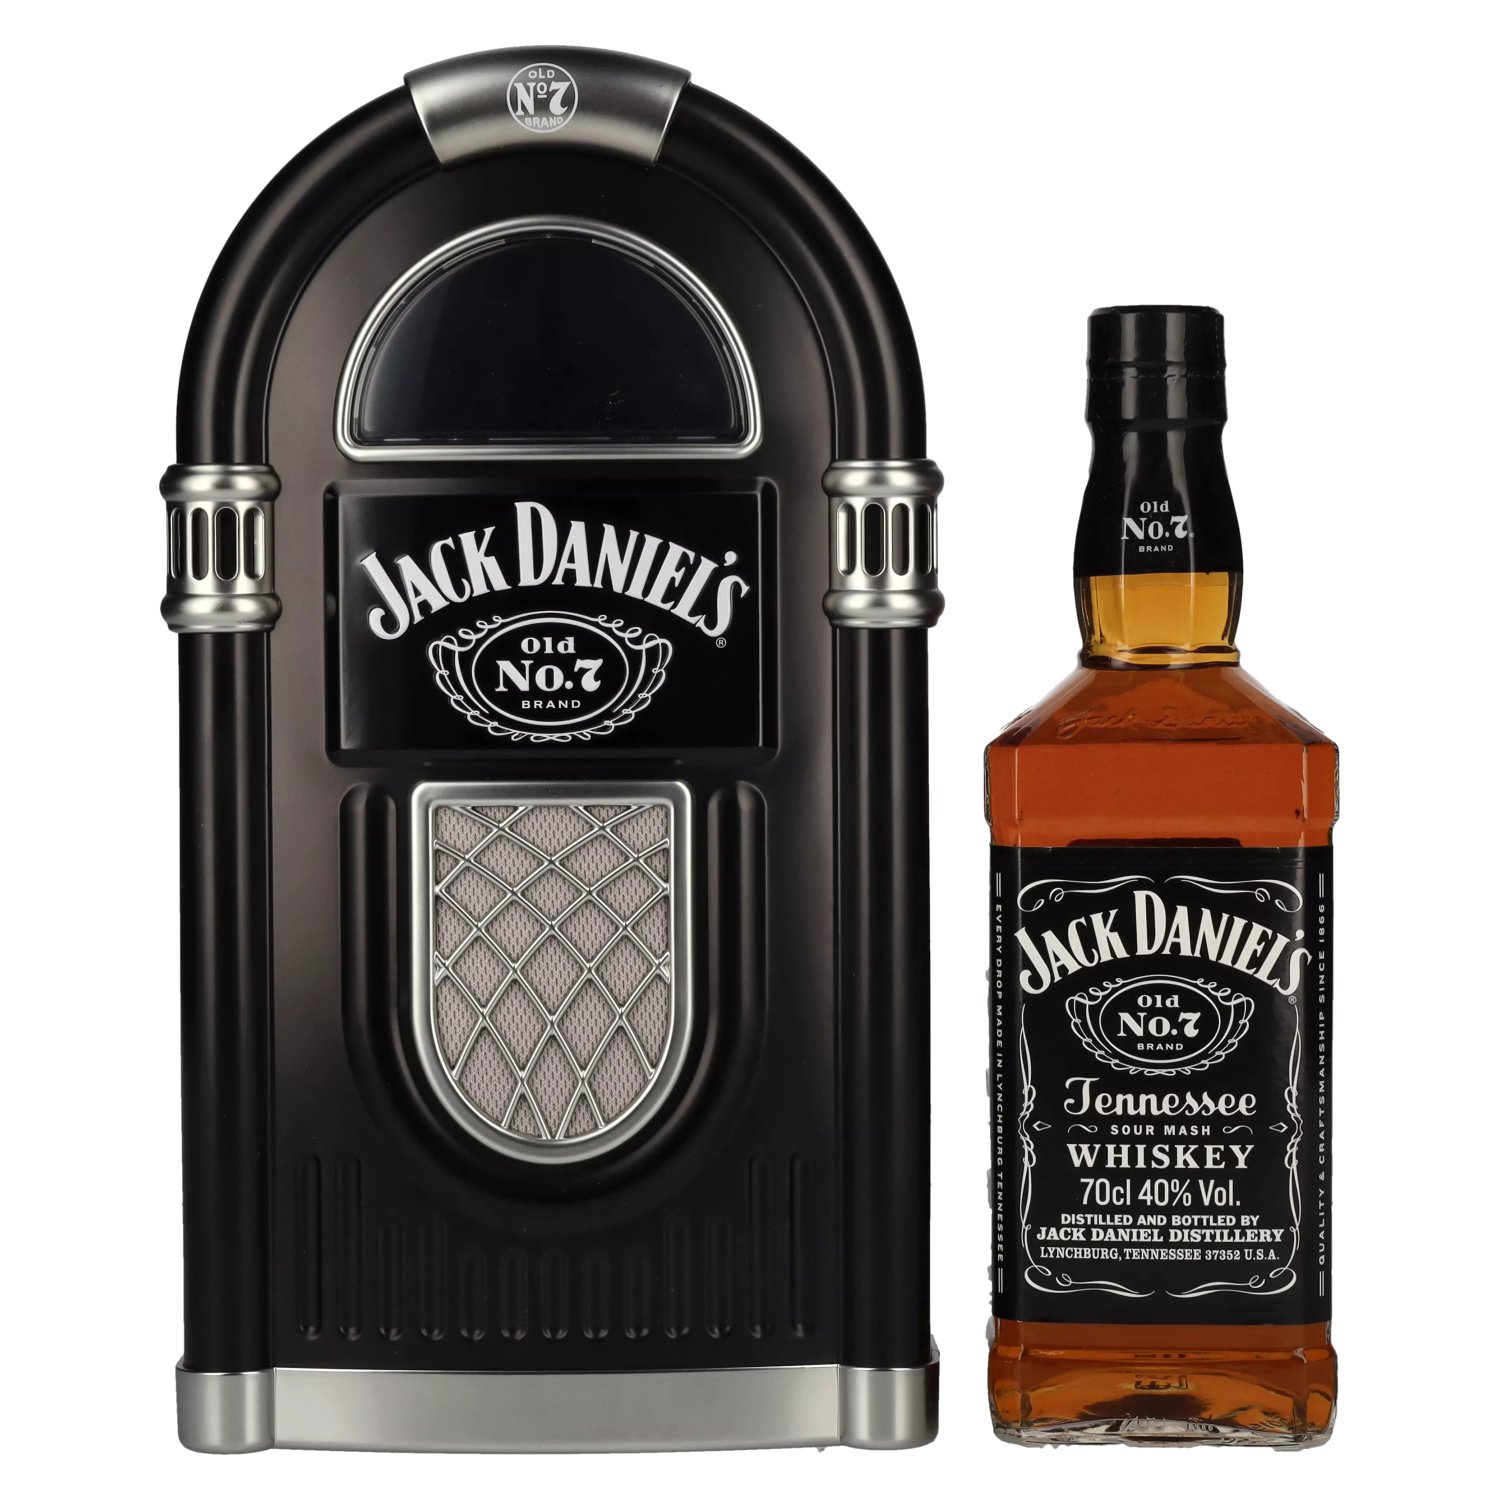 Rejse Generel fodspor Jack Daniel's Tennessee Whiskey JUKEBOX Design 40% Vol. 0,7l in Tinbox